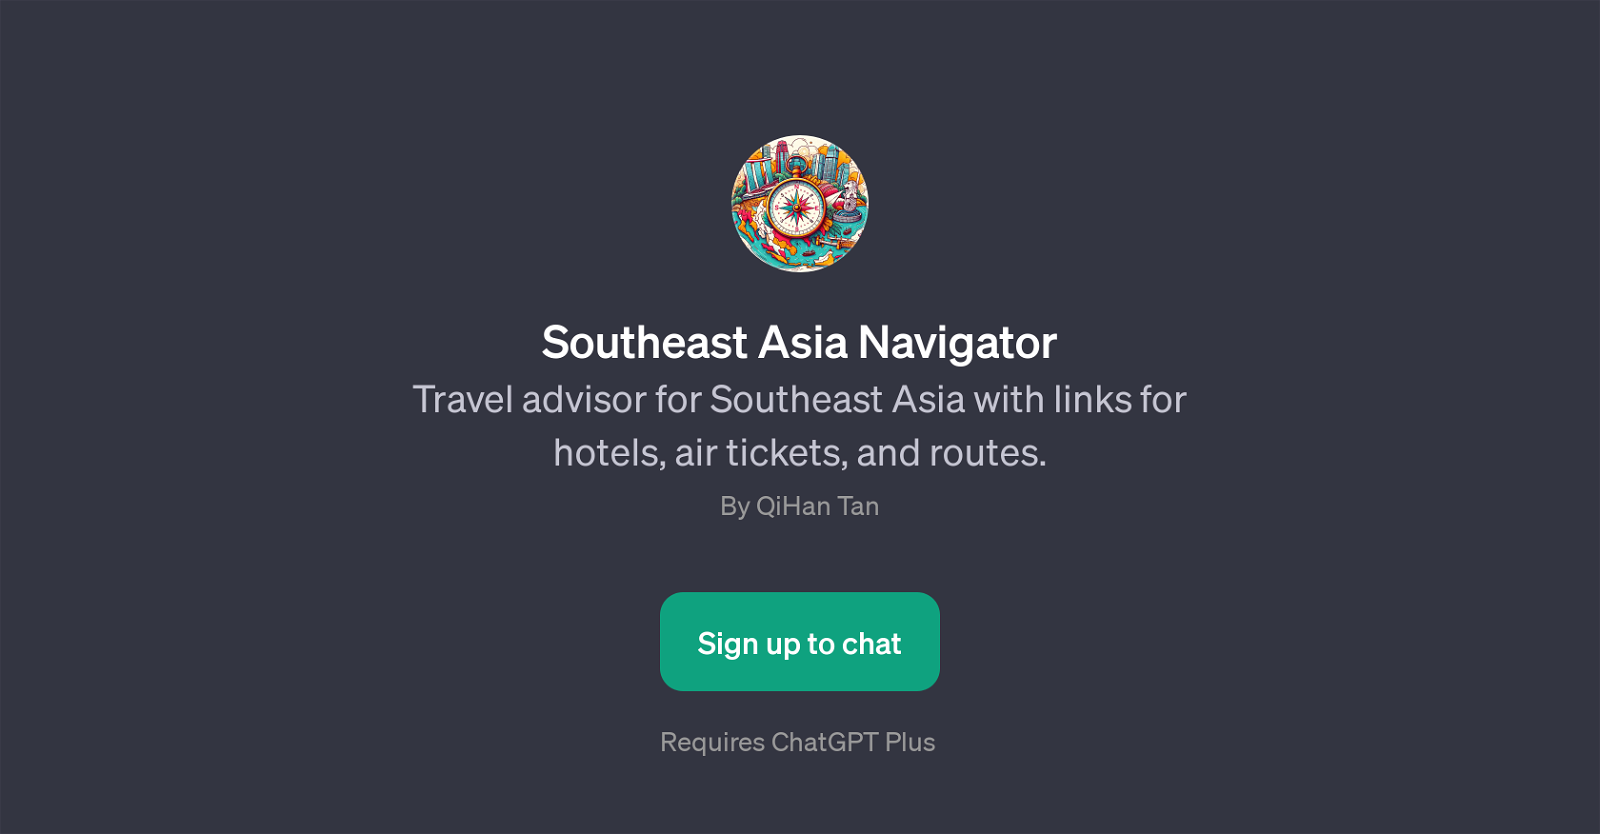 Southeast Asia Navigator website